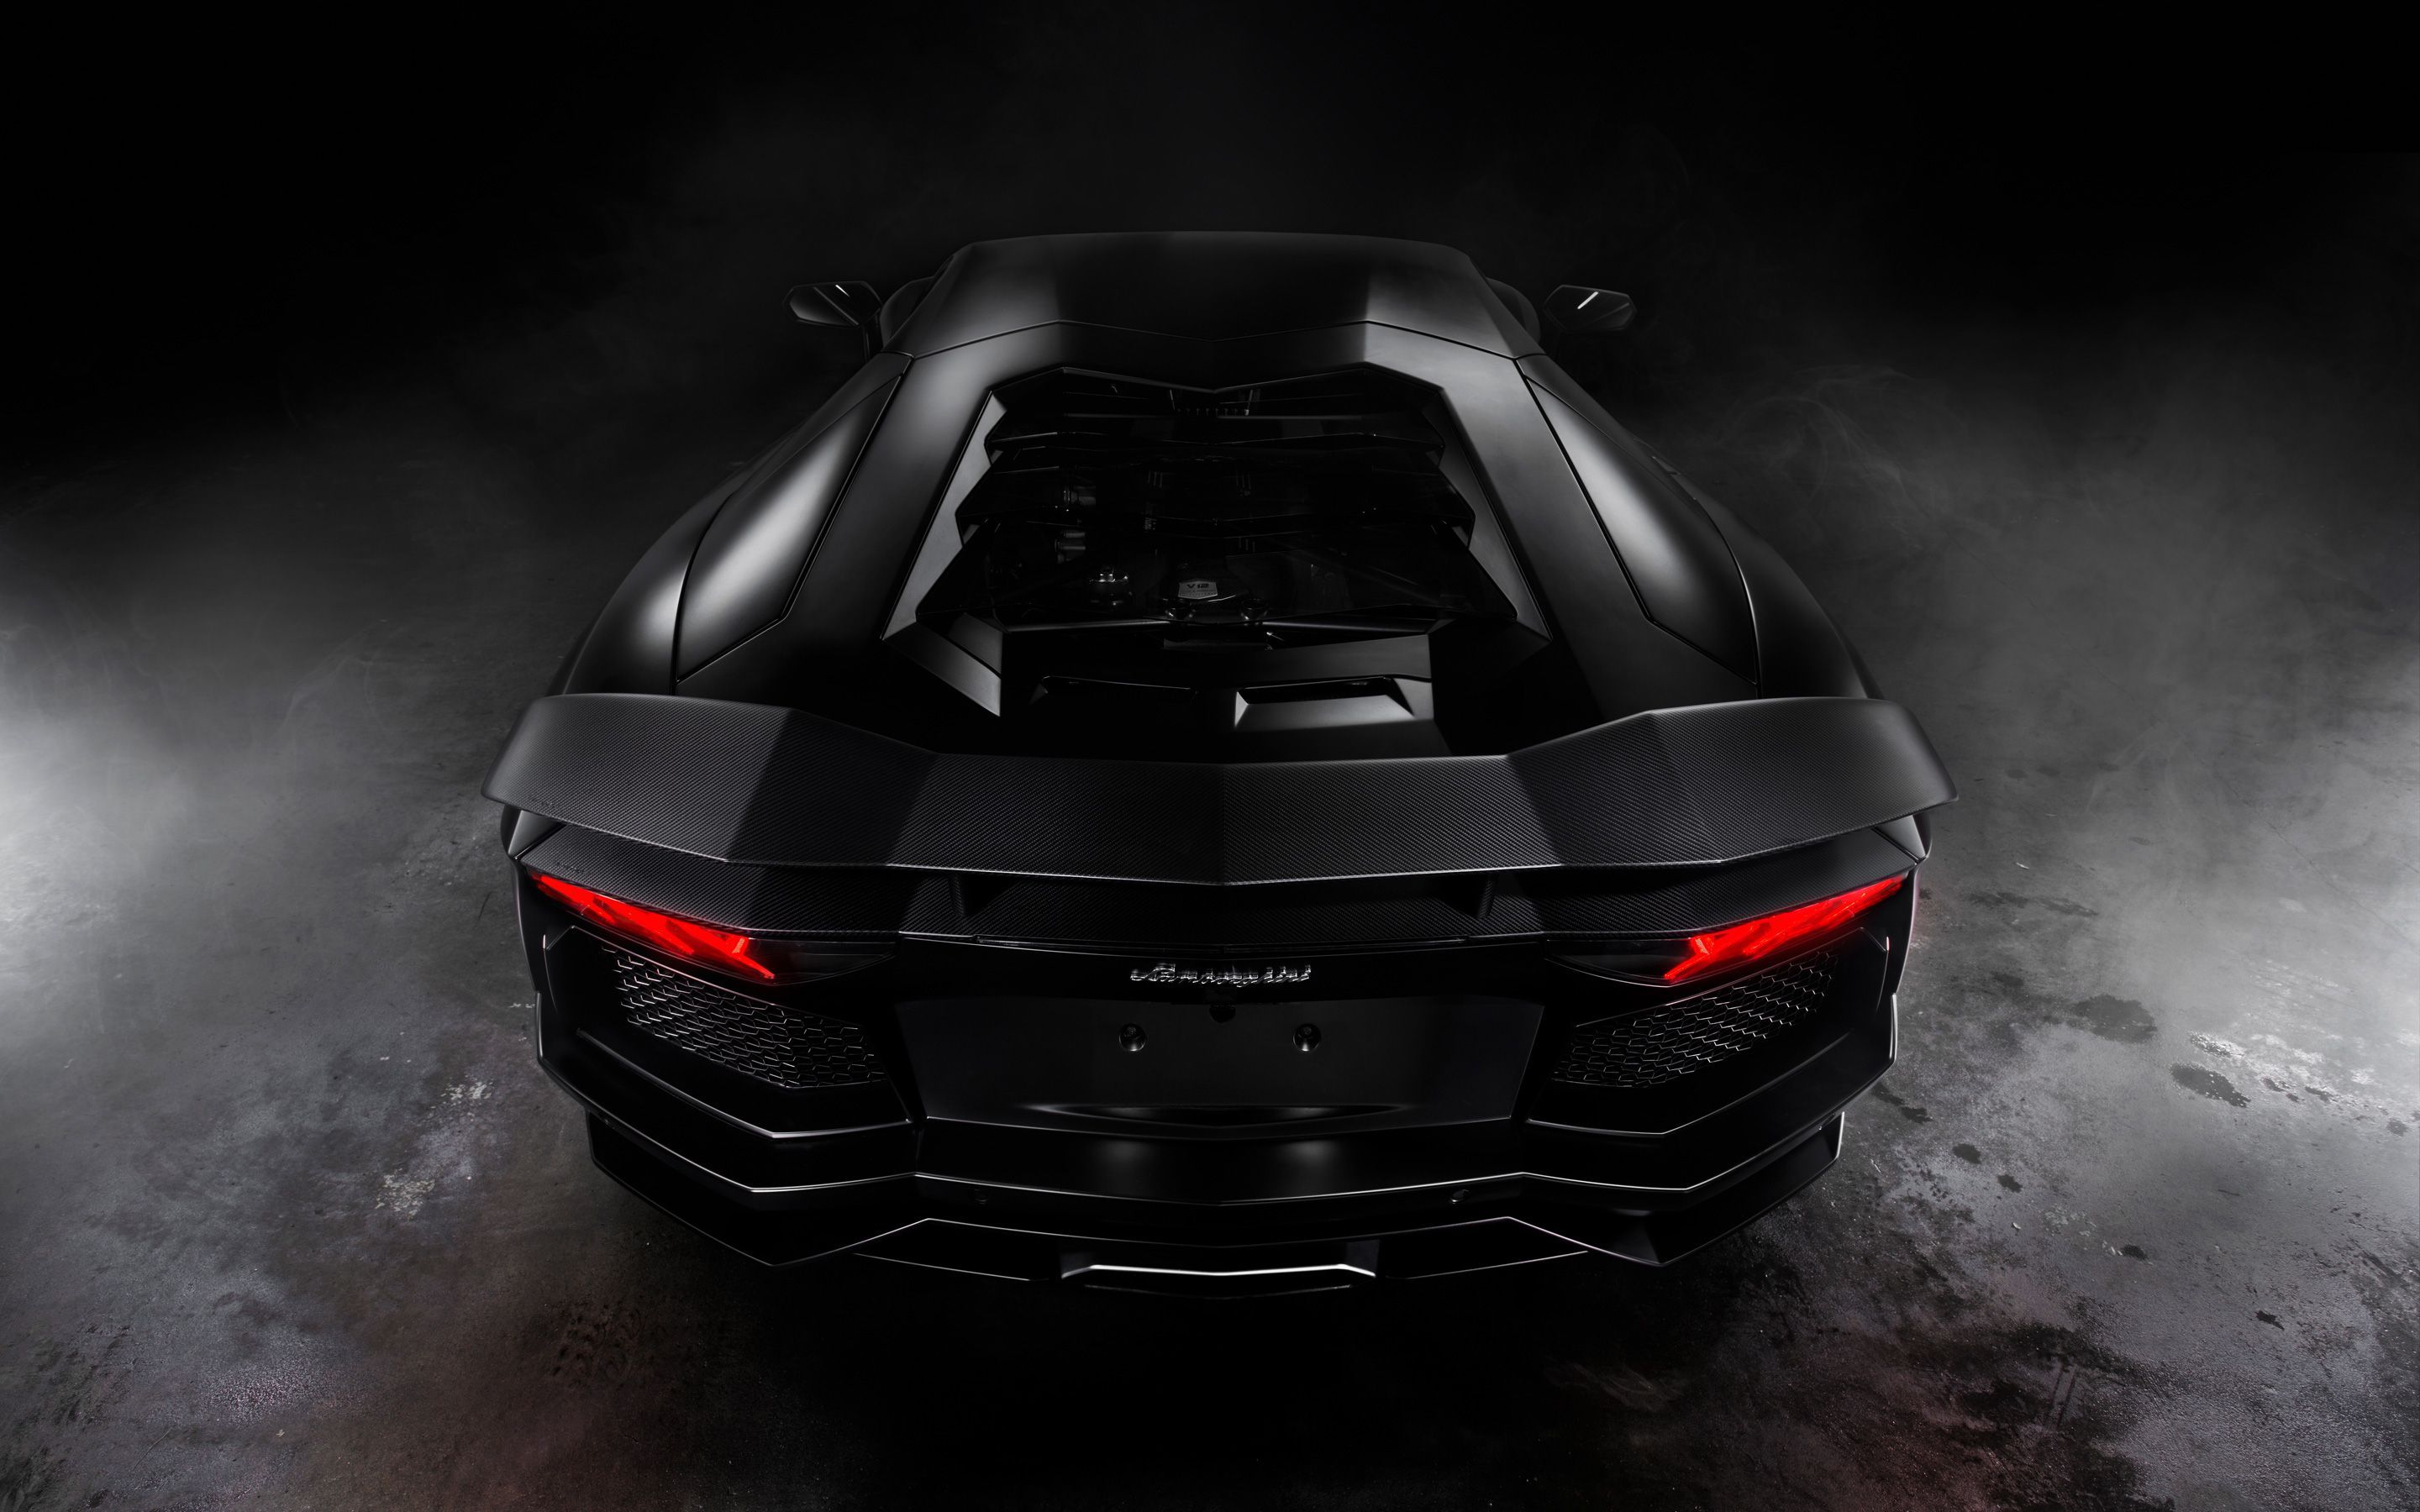 Pictures Of Lamborghini Veneno Wallpapers Photo Download ...